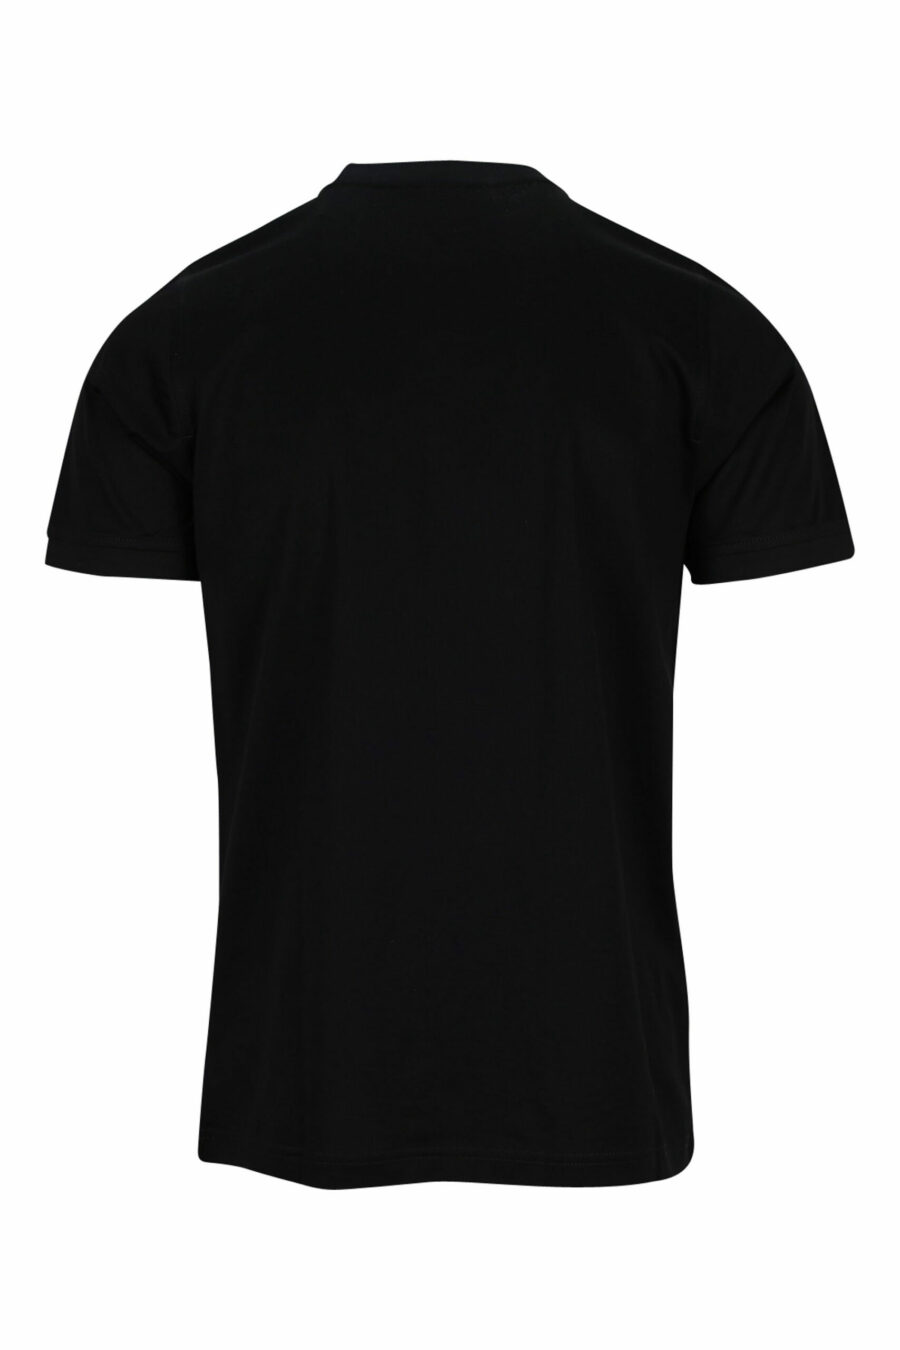 Camiseta negra con minilogo negro - 4062226400473 1 scaled